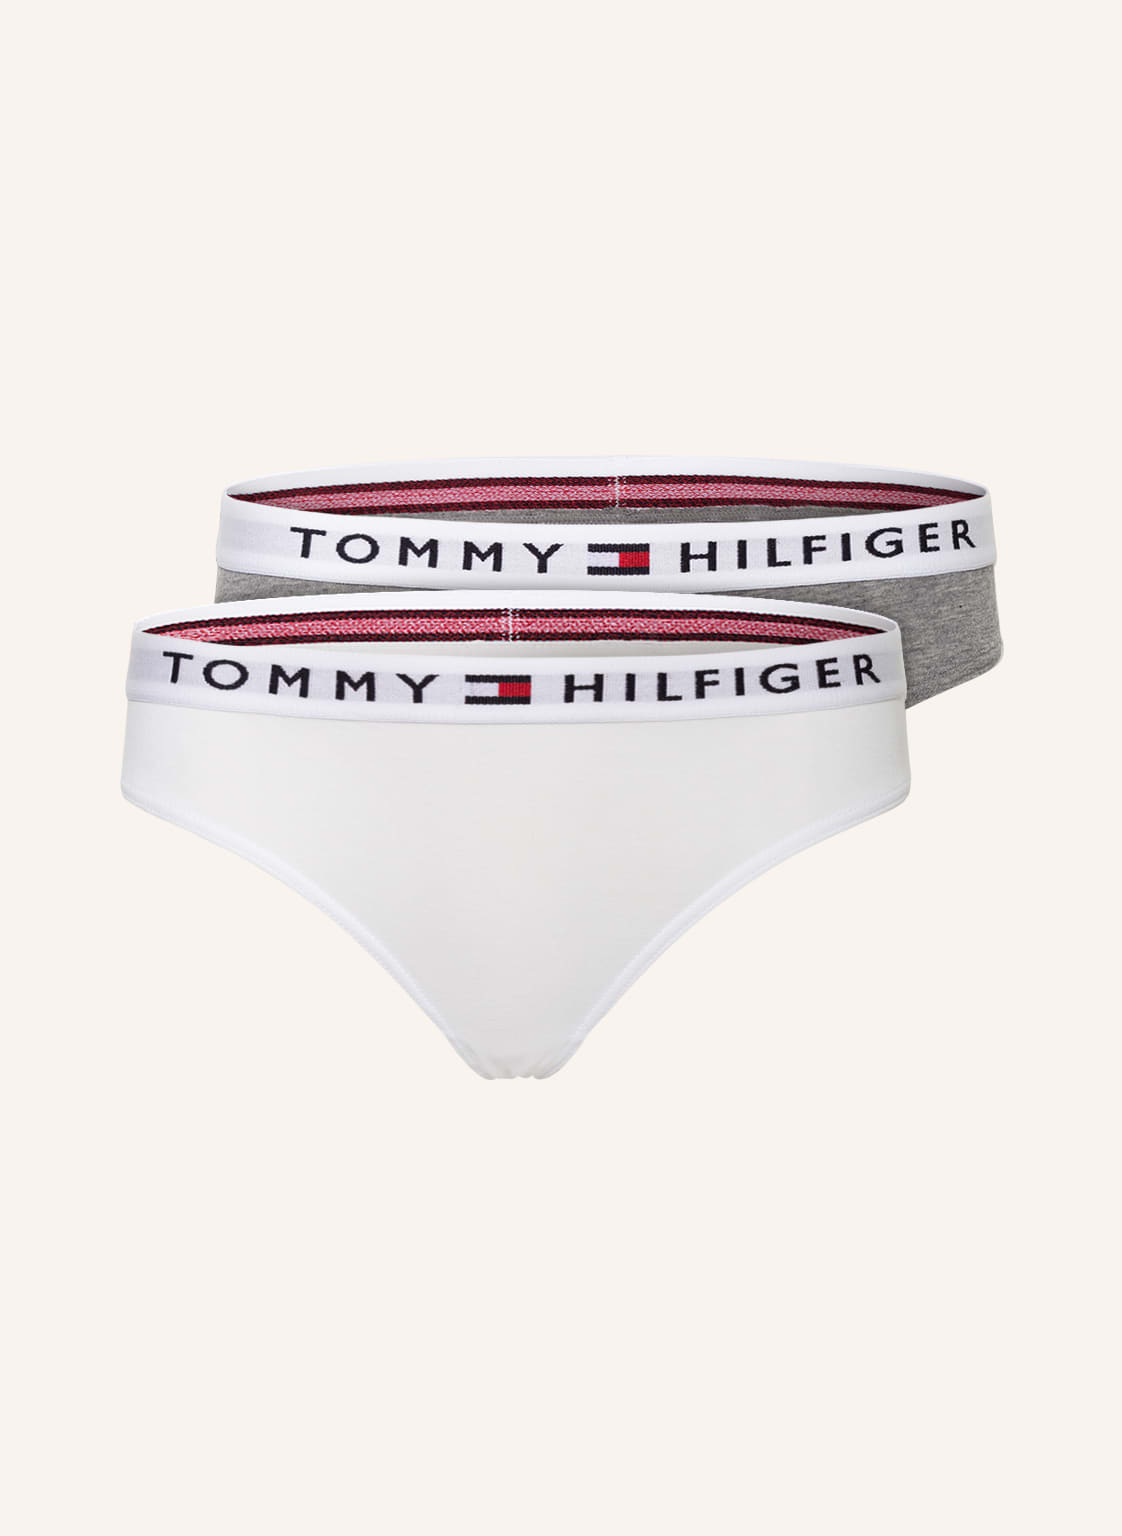 Tommy Hilfiger Figi, 2 Szt. grau